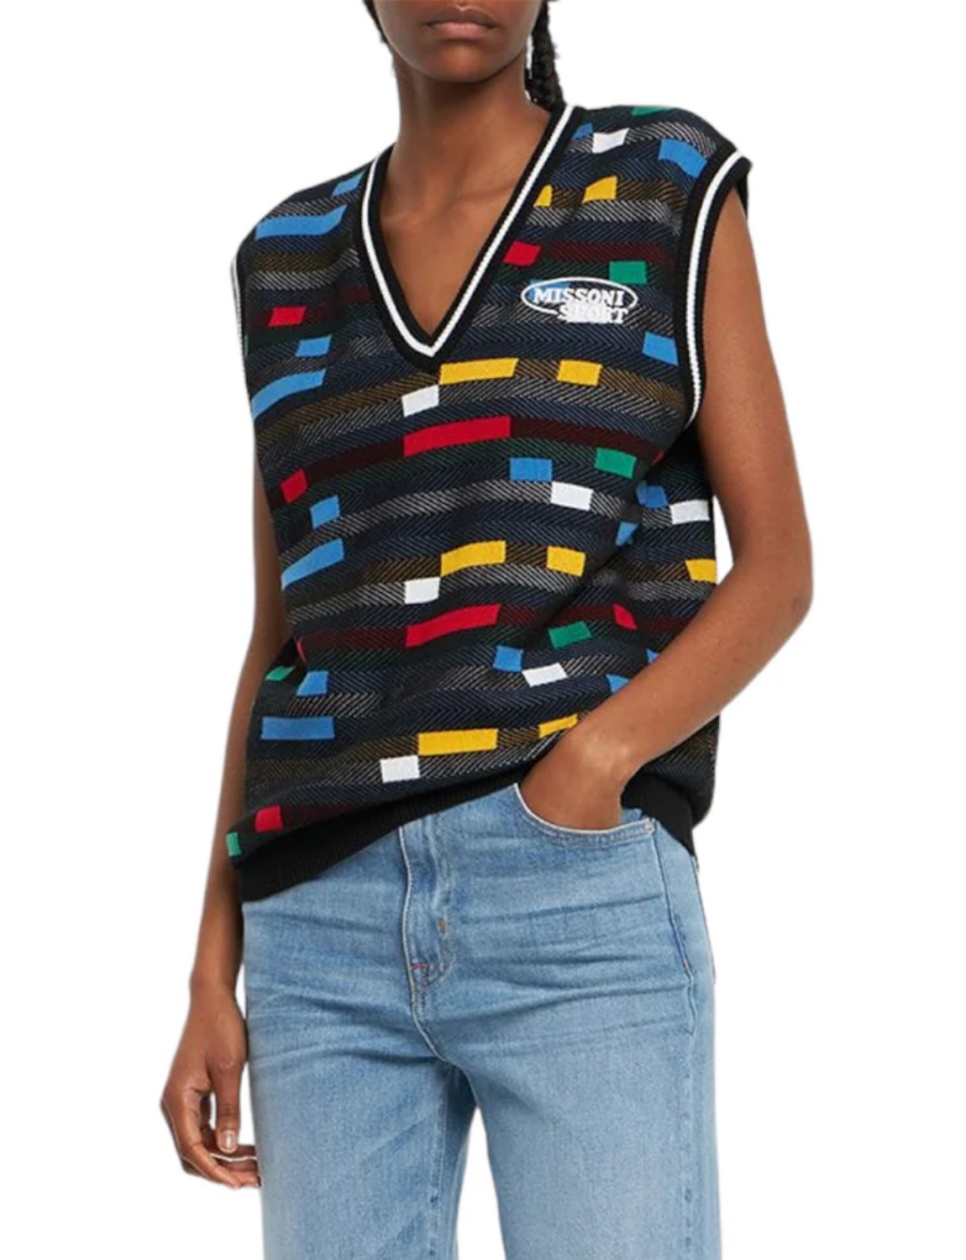 Missoni Jacquard Knit Patterned Vest Black Multicolor